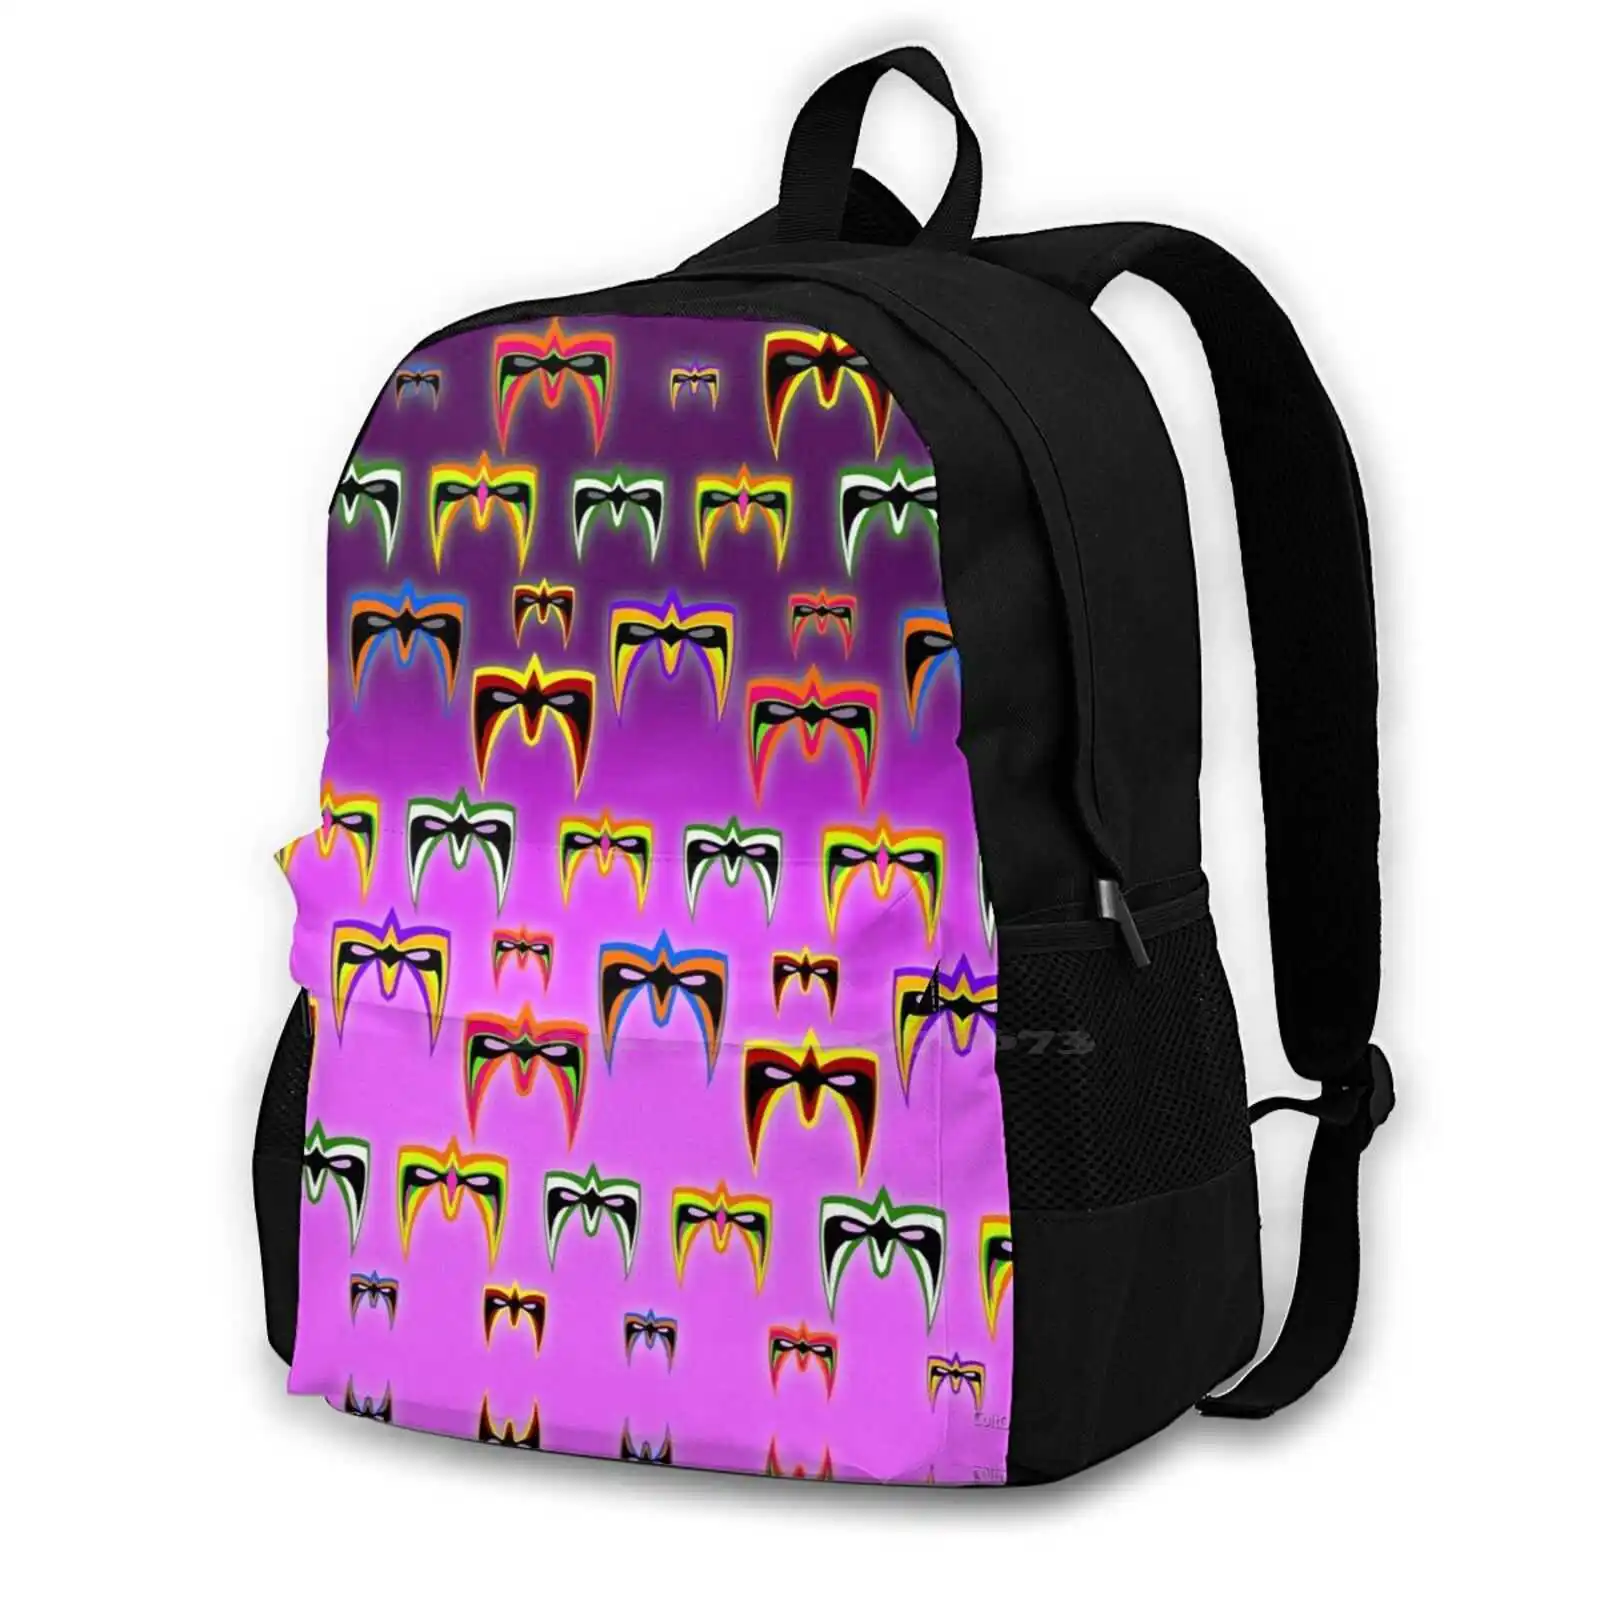 

Ultimate Warrior-Inspired Pattern Backpacks For Men Women Teenagers Girls Bags Ultimate Warrior Hbk Heartbreak Kid Dx